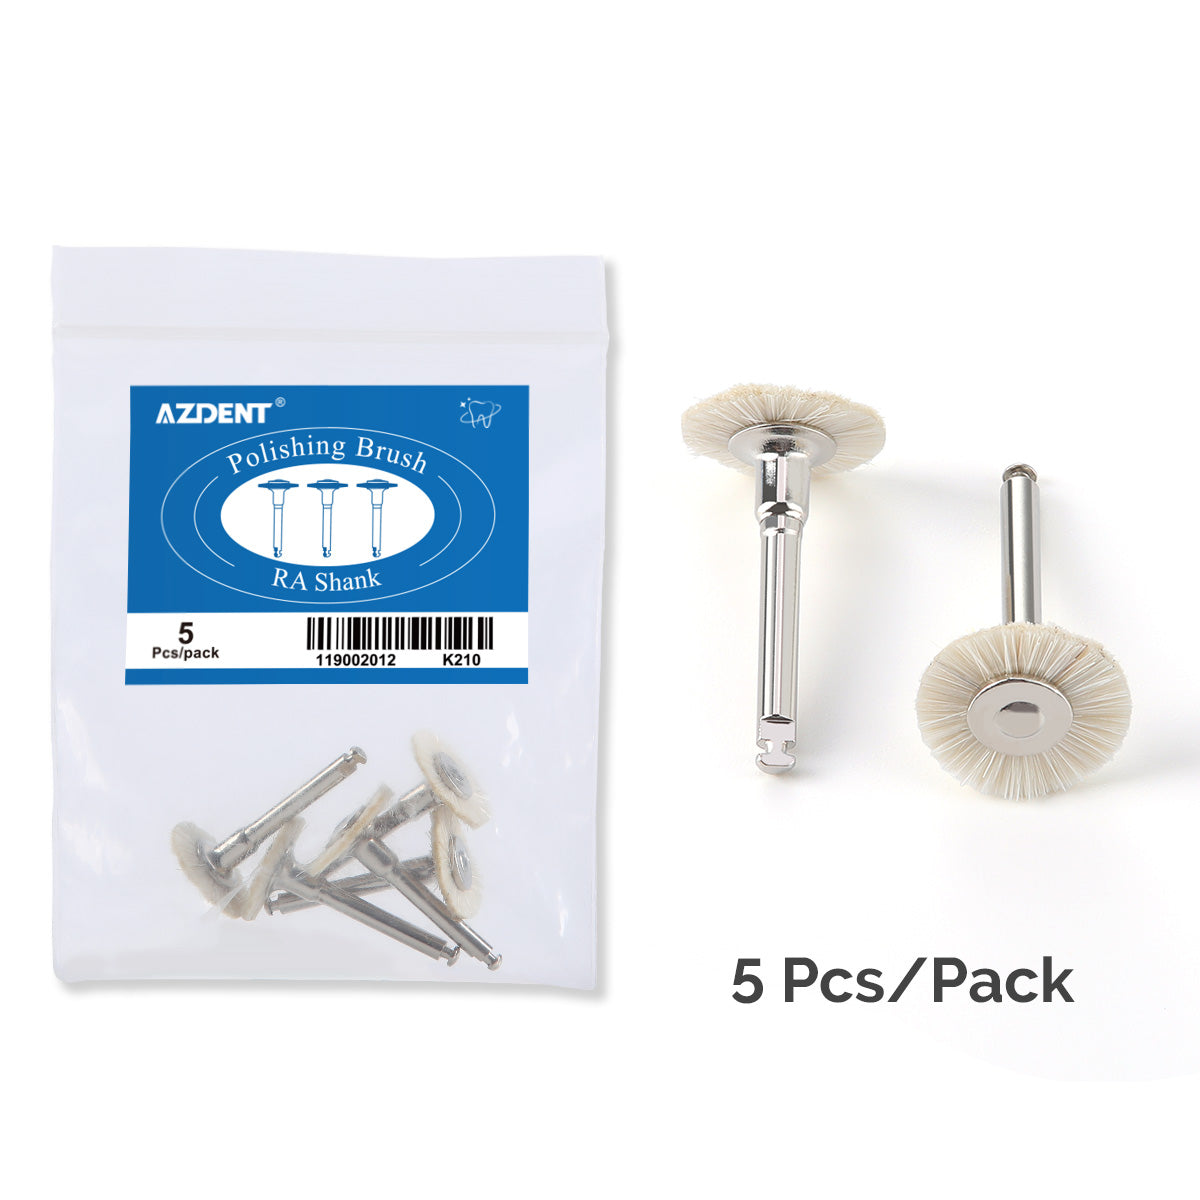 Orthdent Dental 4Pcs/Kit Resin Polish Eagle Claw Wheel Eight-jaw